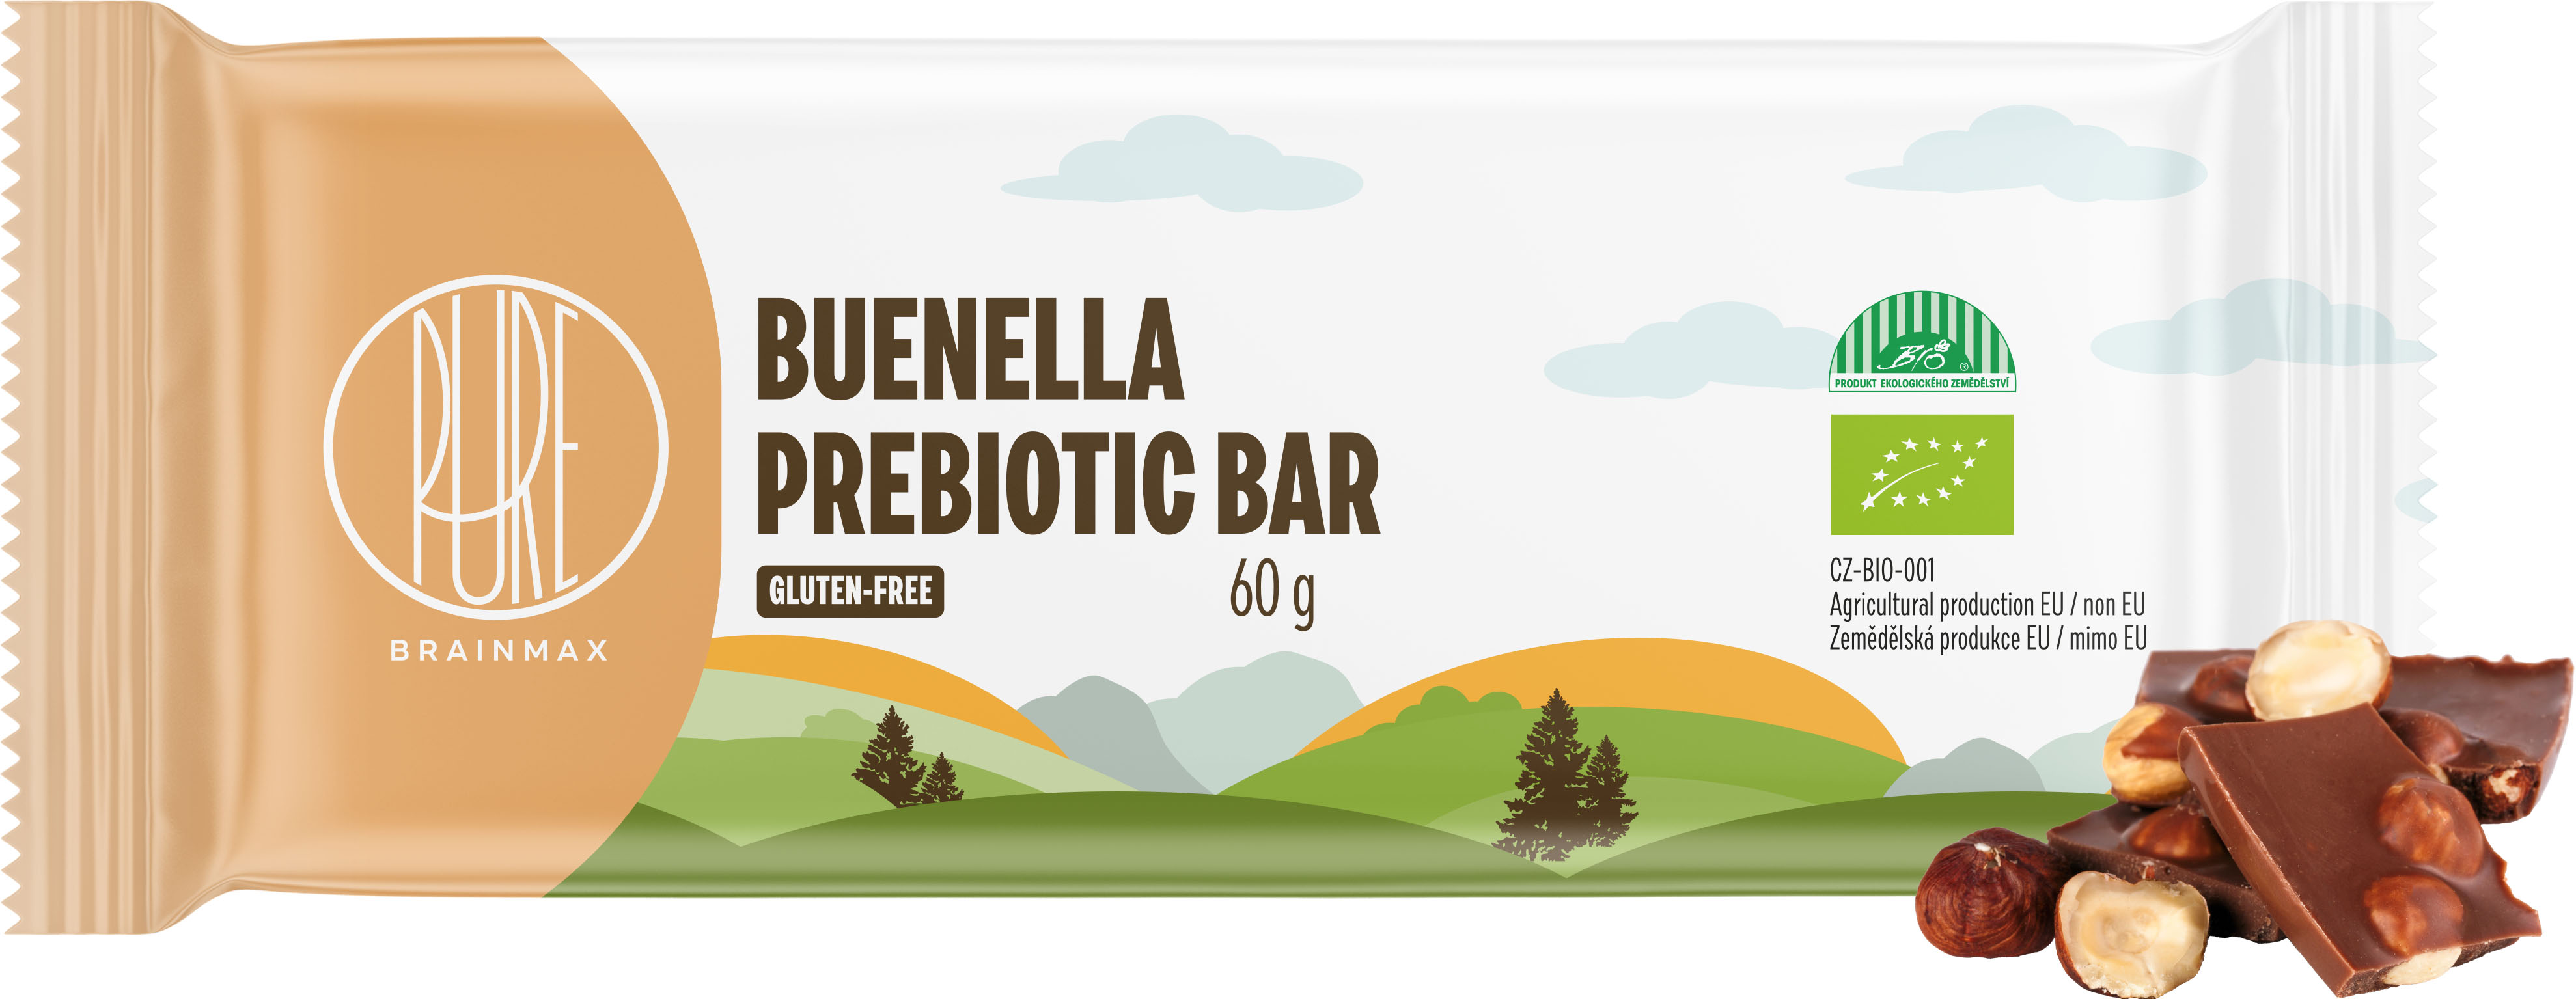 BrainMax Pure Buenella Prebiotic Bar, tyčinka s vlákninou, Buenella, BIO, 60 g *CZ-BIO-001 certifikát / tyčinka s vlákninou a lískooříškovým krémem